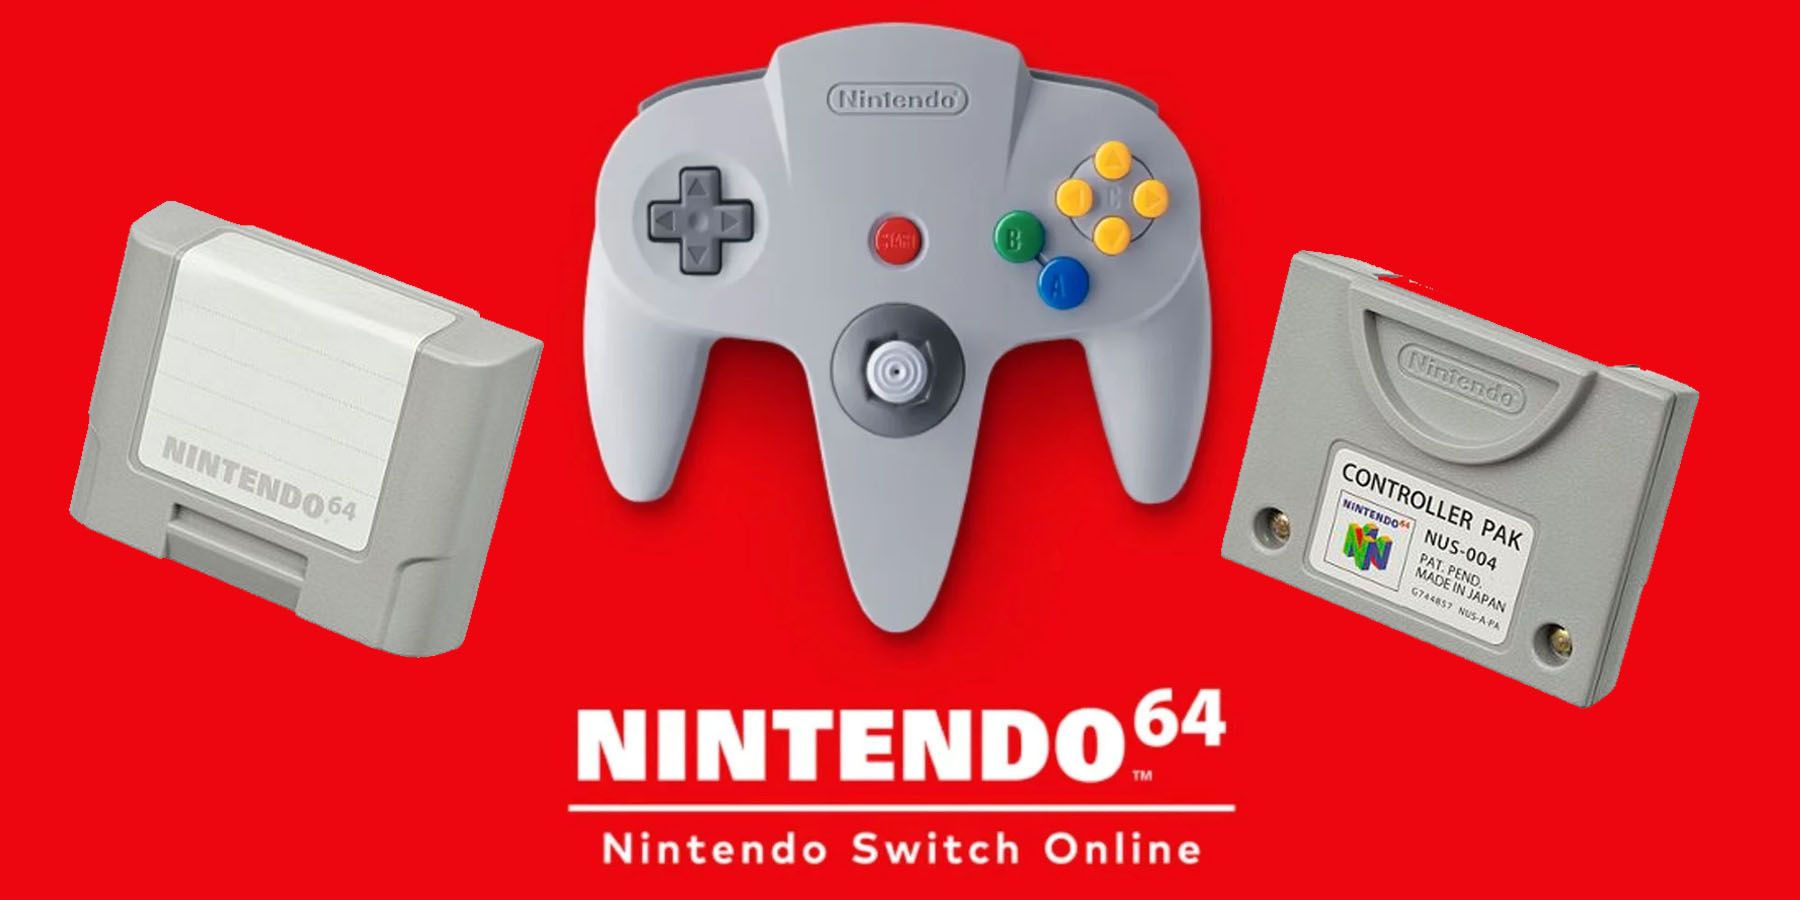 Nintendo control. Контроллер Нинтендо 64. Нинтендо пак. Плей пак Нинтендо. Nintendo 64 Controller Test.